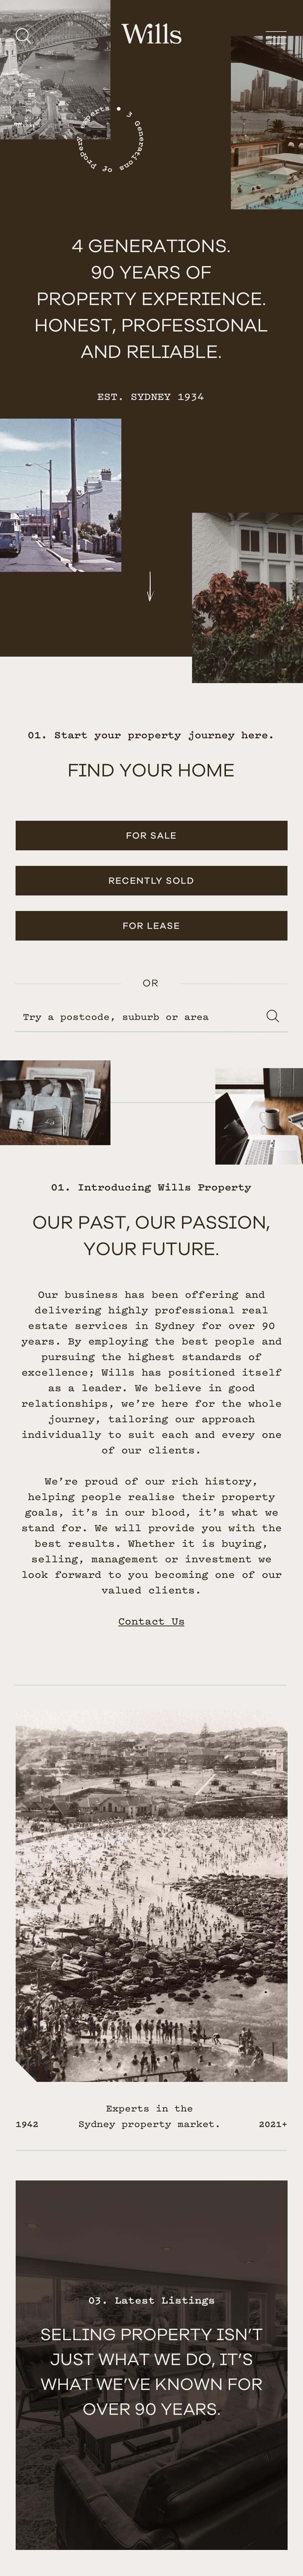 Wills Property - Real Estate Mobile UX Homepage | Atollon - a design company